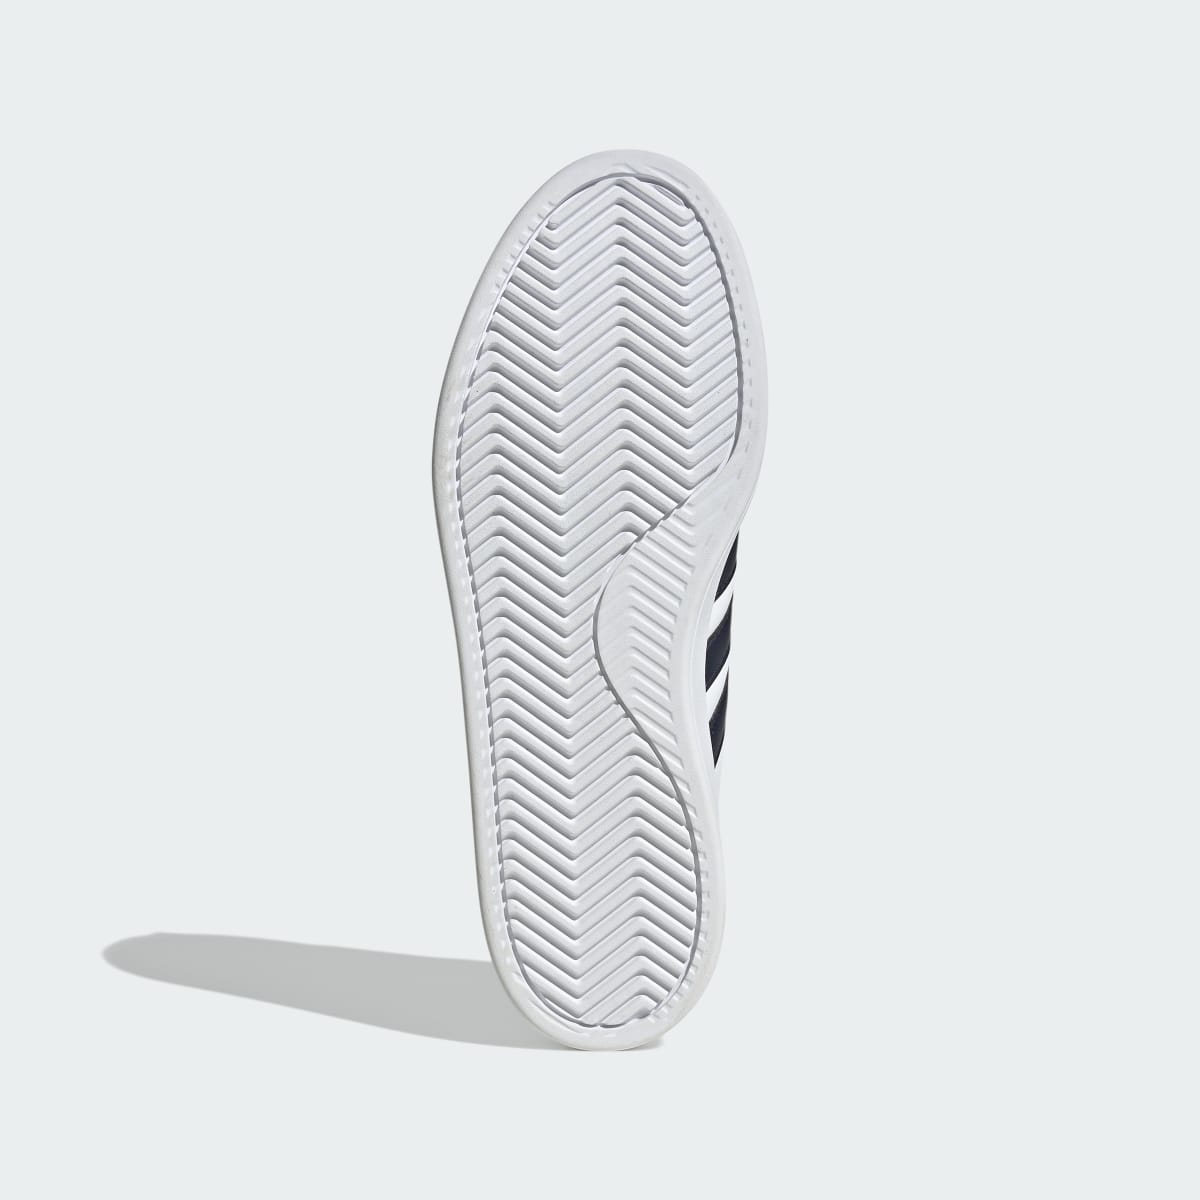 Adidas Grand Court Cloudfoam Comfort Shoes. 4